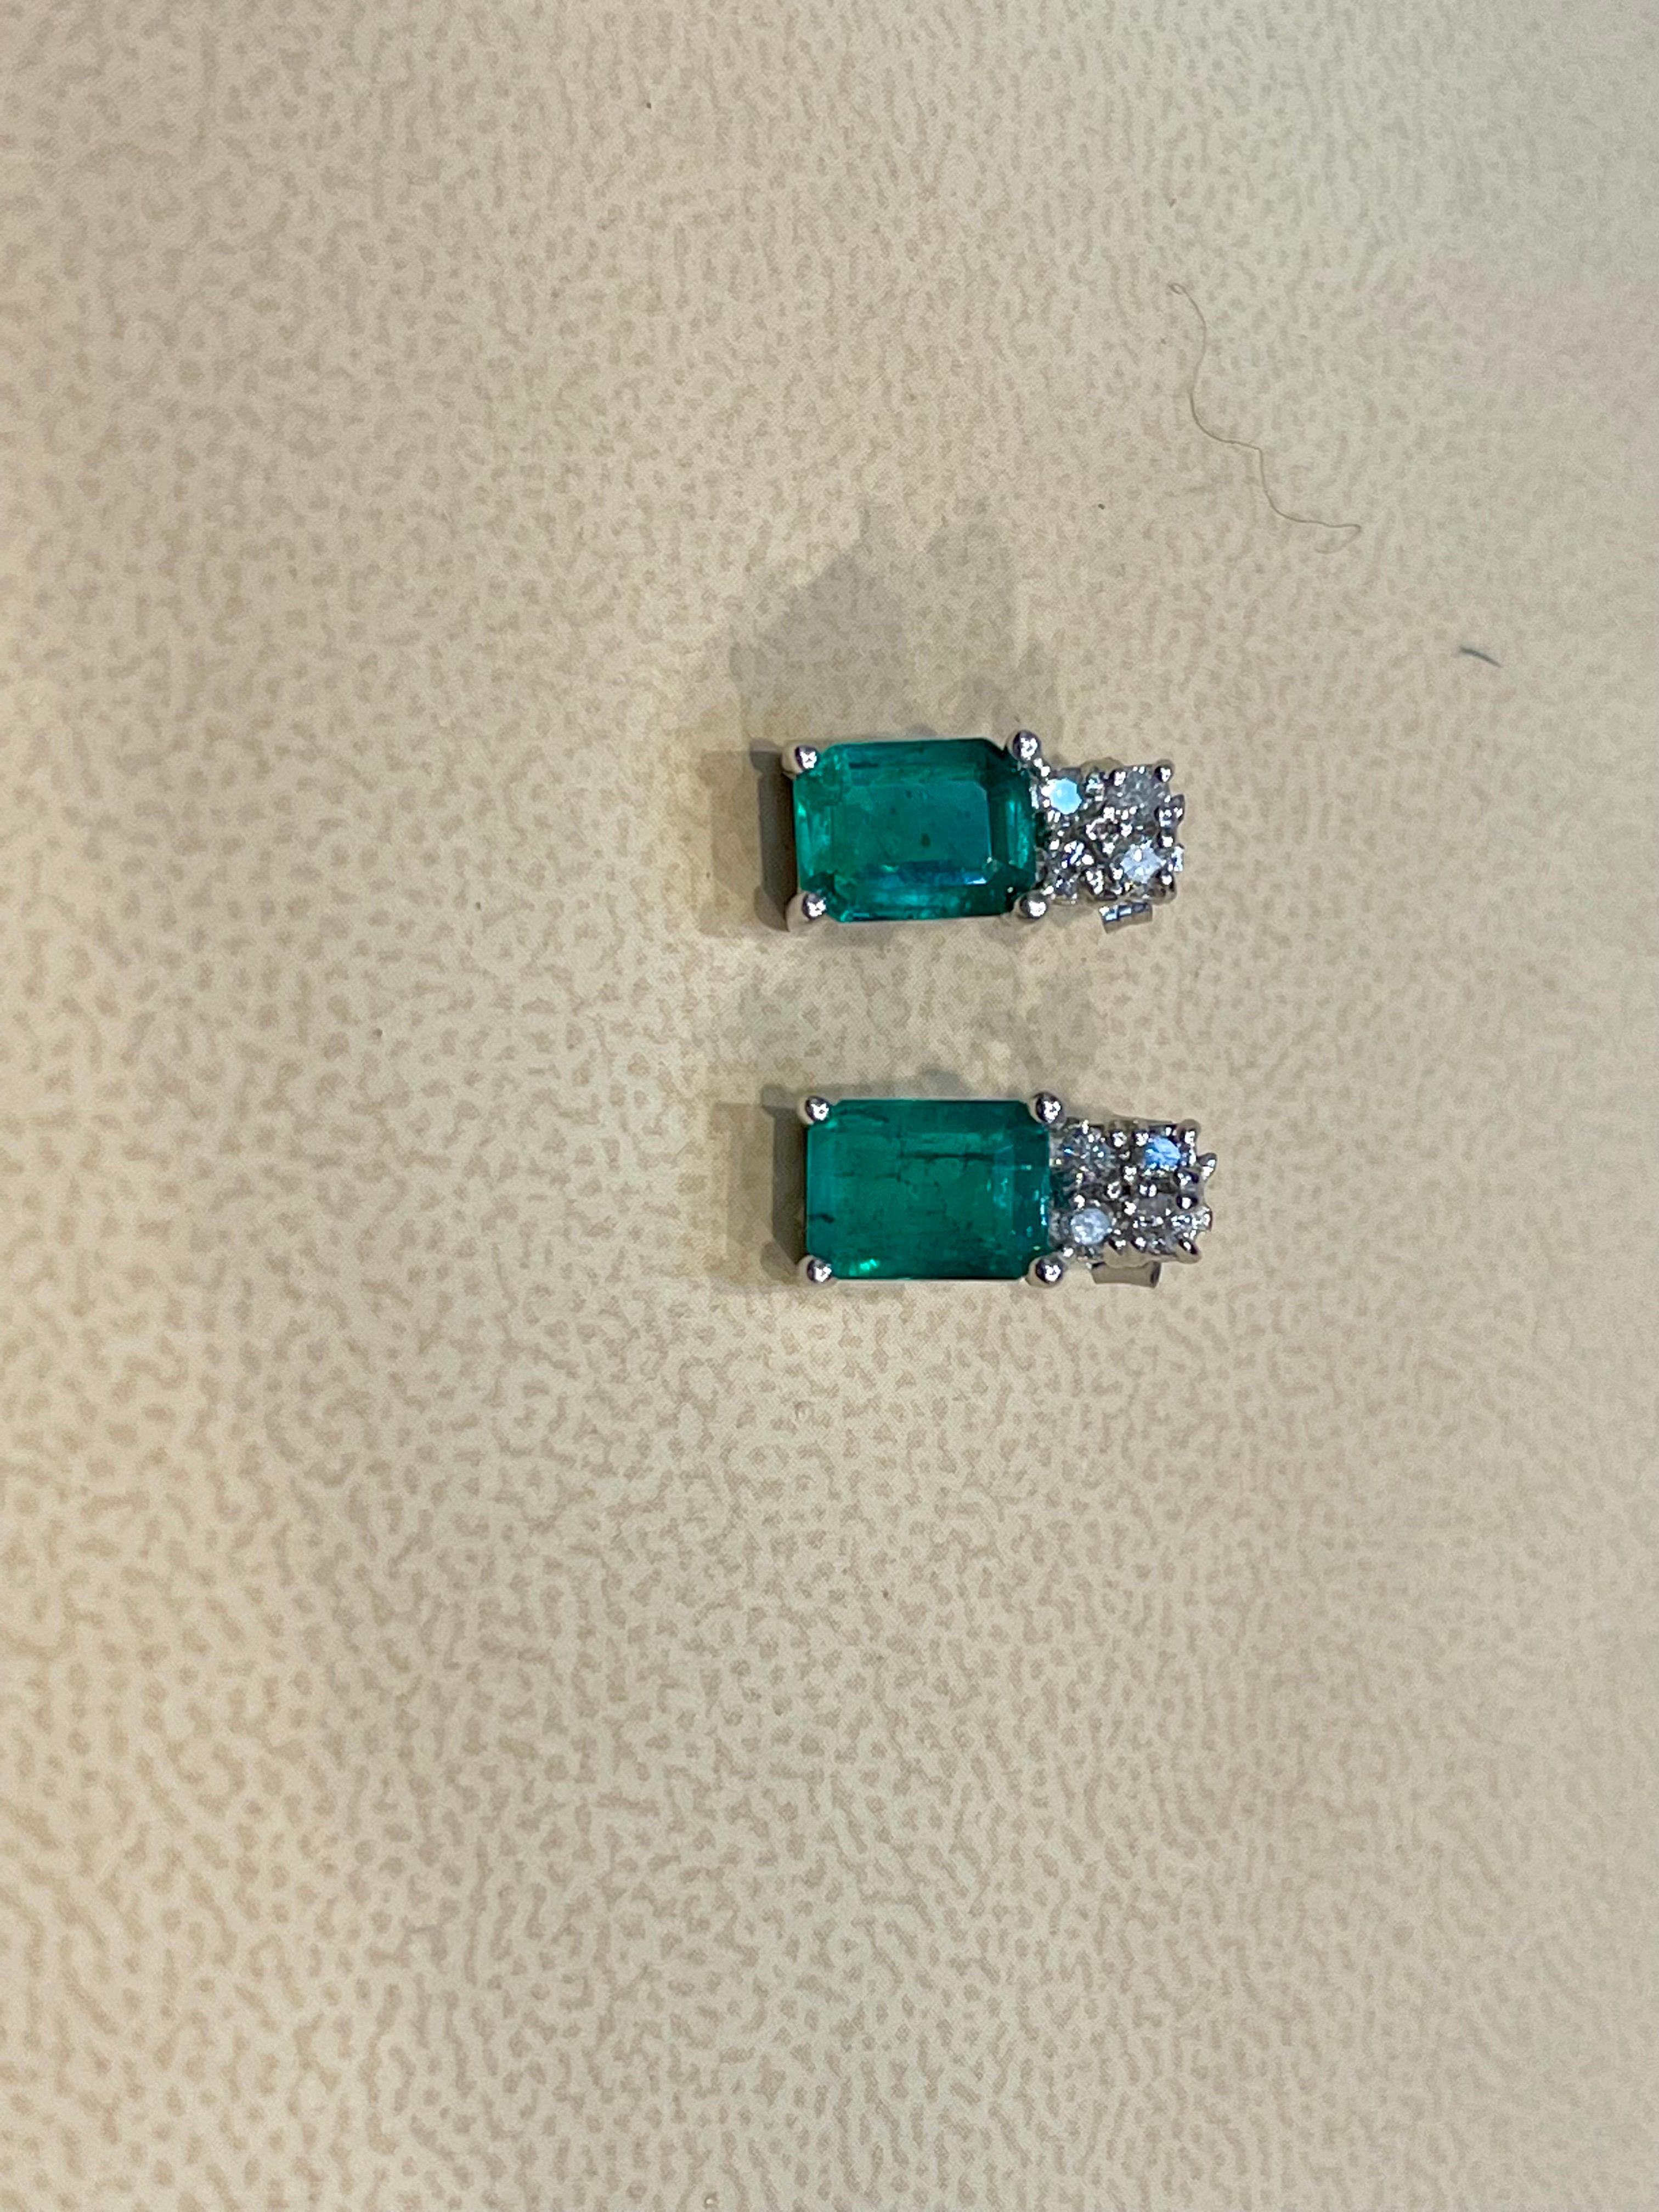 2.5 Carat Emerald Cut Emerald & 0.50 Ct Diamond Stud Earrings 14 Kt White Gold 5